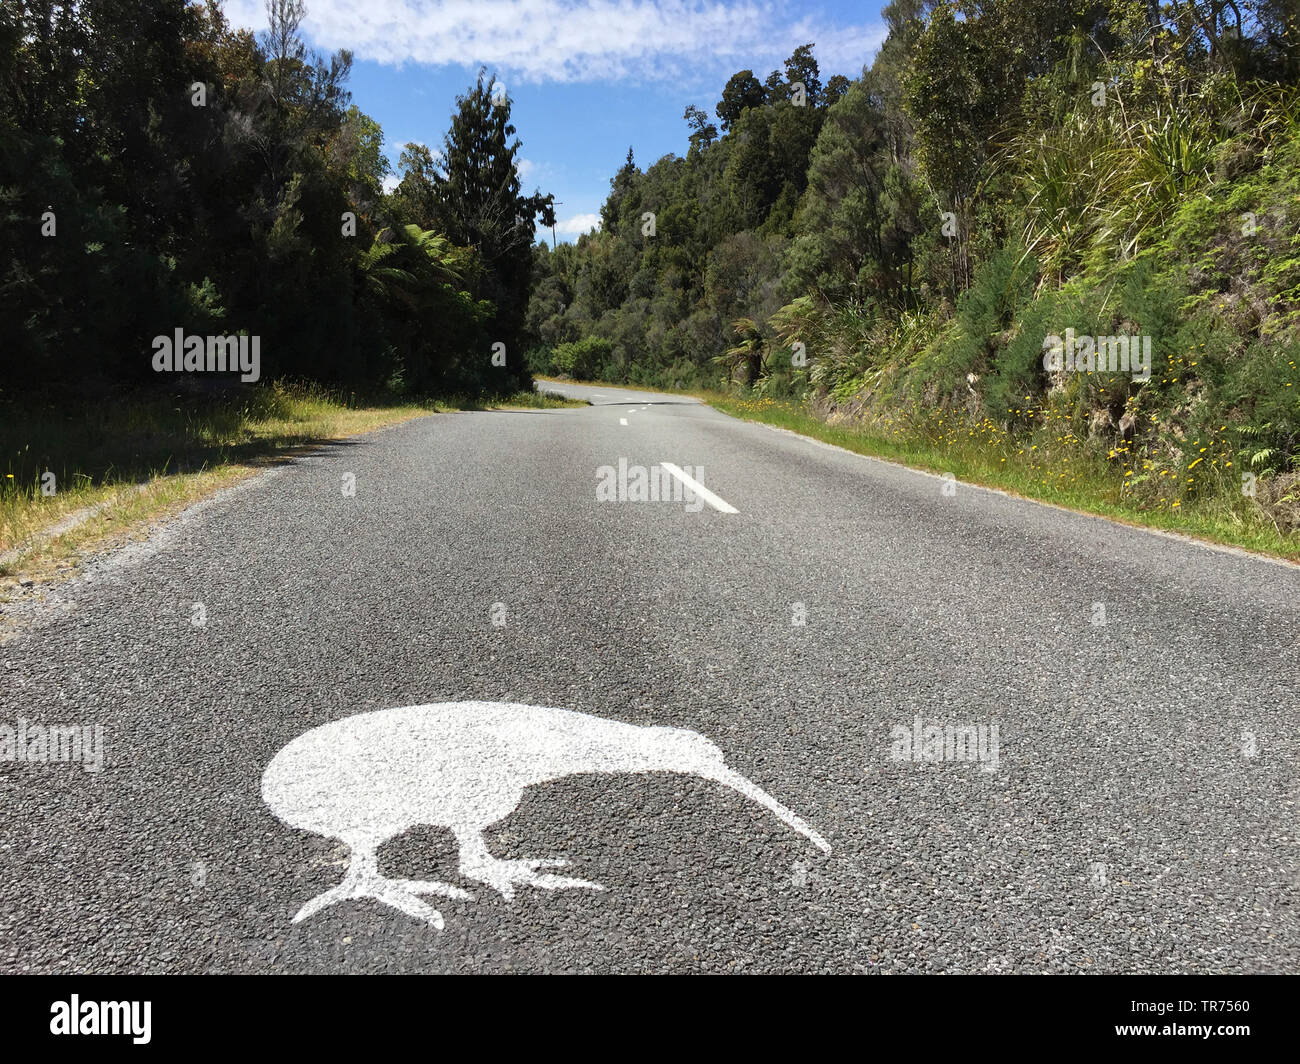 Okarito kiwi, Rowi, Okarito brown kiwi (Apteryx rowi), cartello stradale Okarito Kiwi vicino Okarito, Nuova Zelanda, Isola Meridionale, Okarito Foto Stock